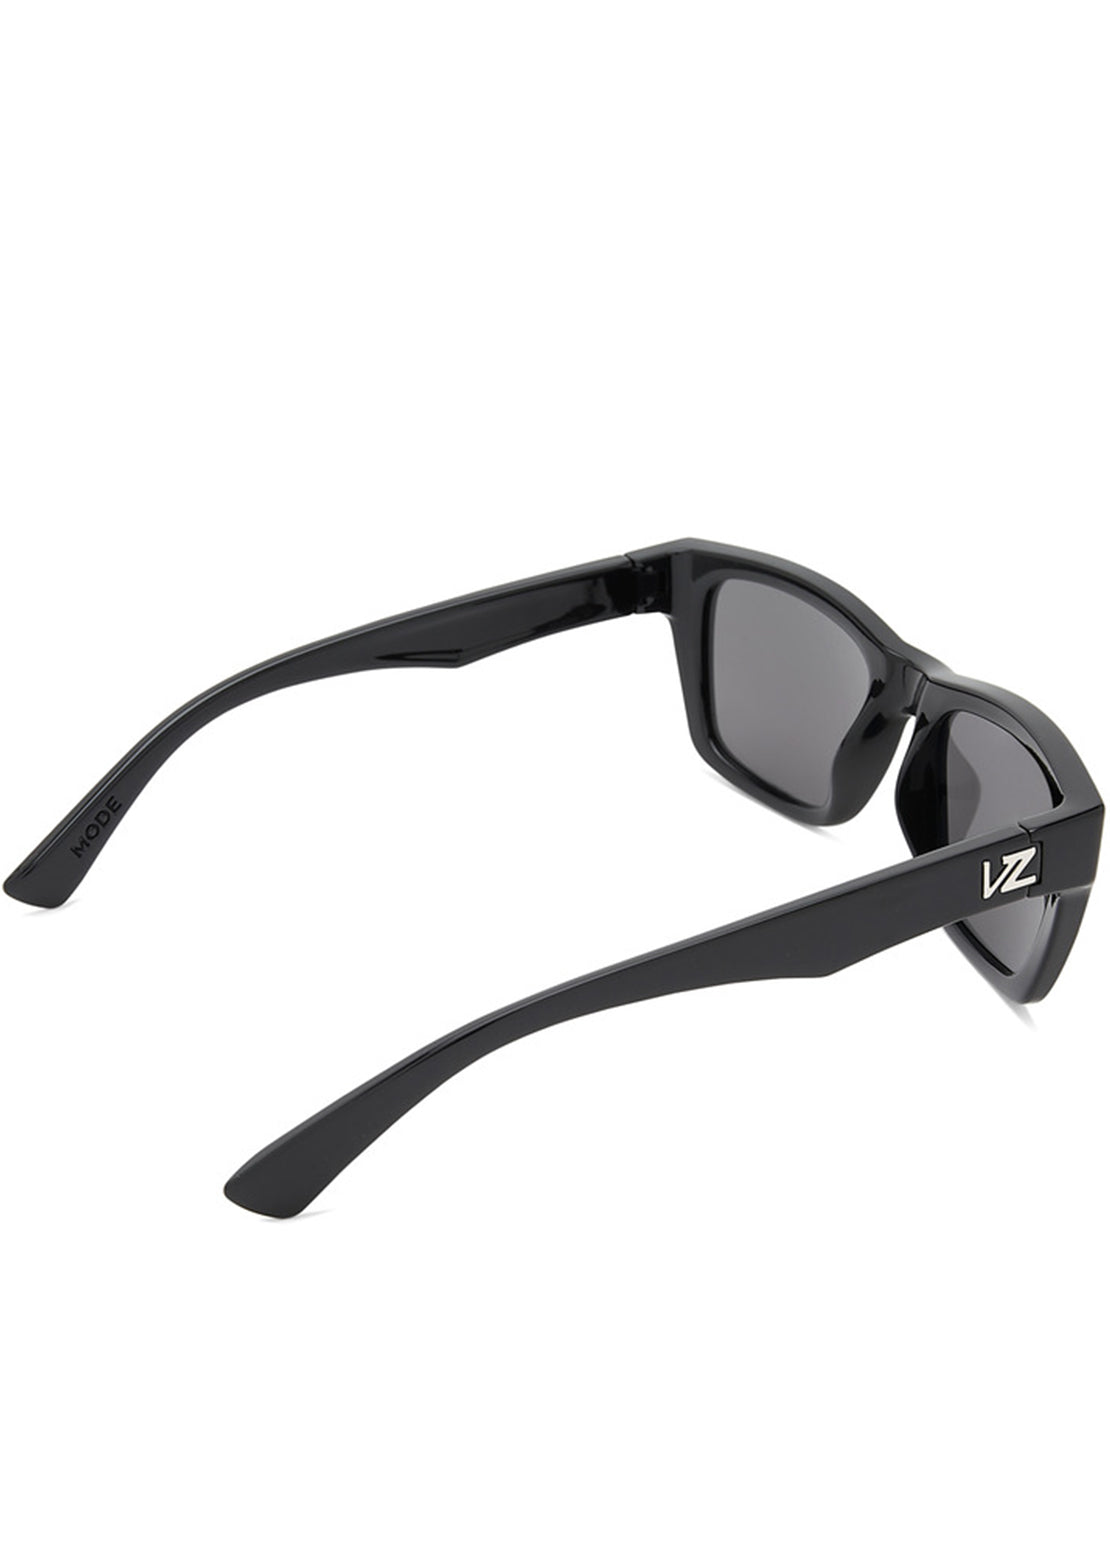 Von Zipper Mode Sunglasses Black Gloss/ Grey